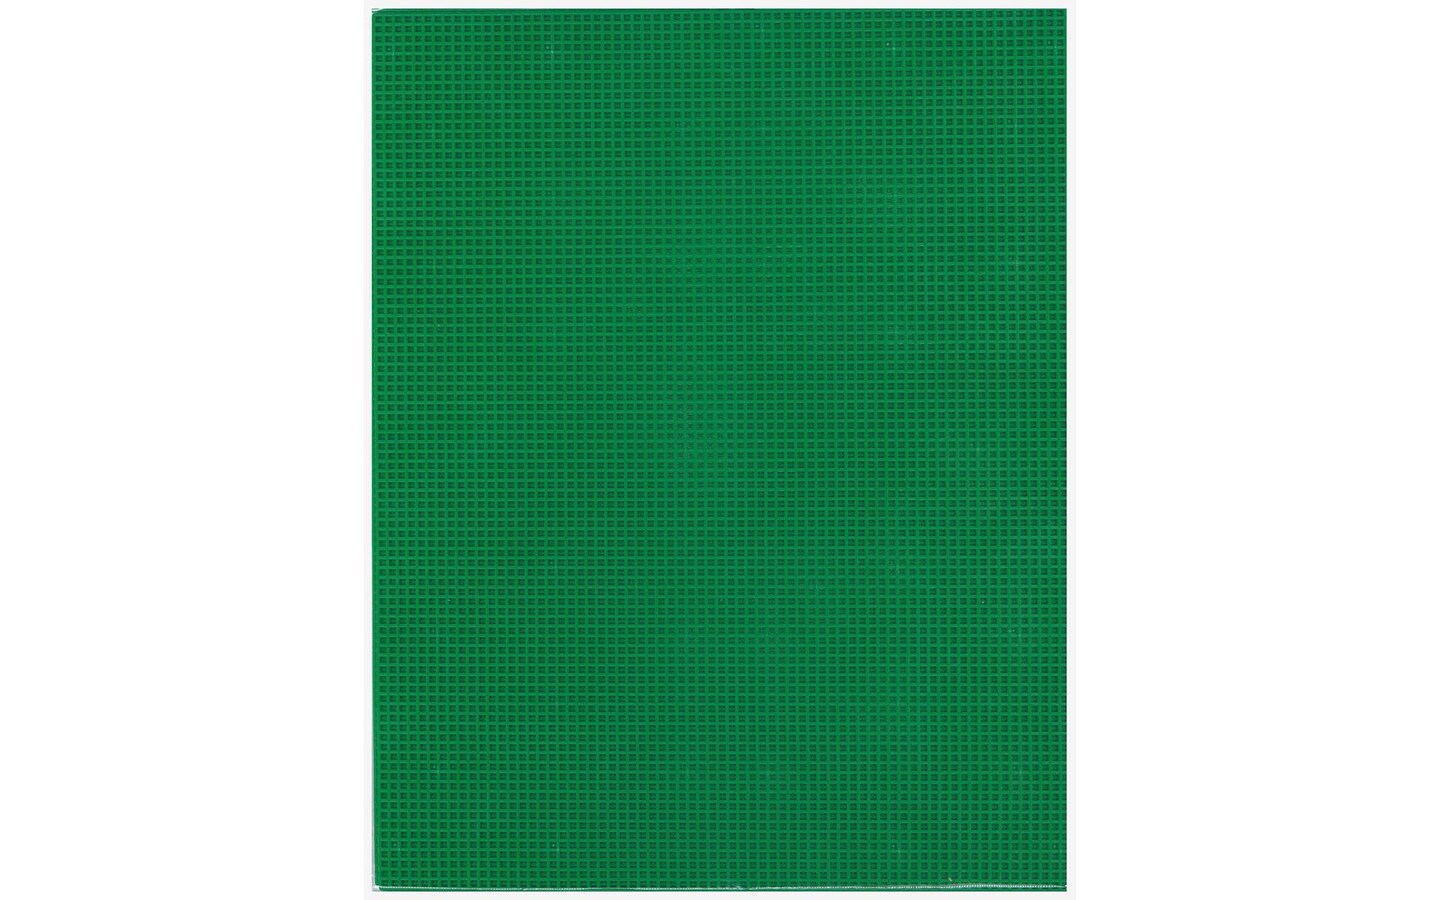 EBL Plastic Canvas 7ct 10.63x13.5 Kelly Green 6pc